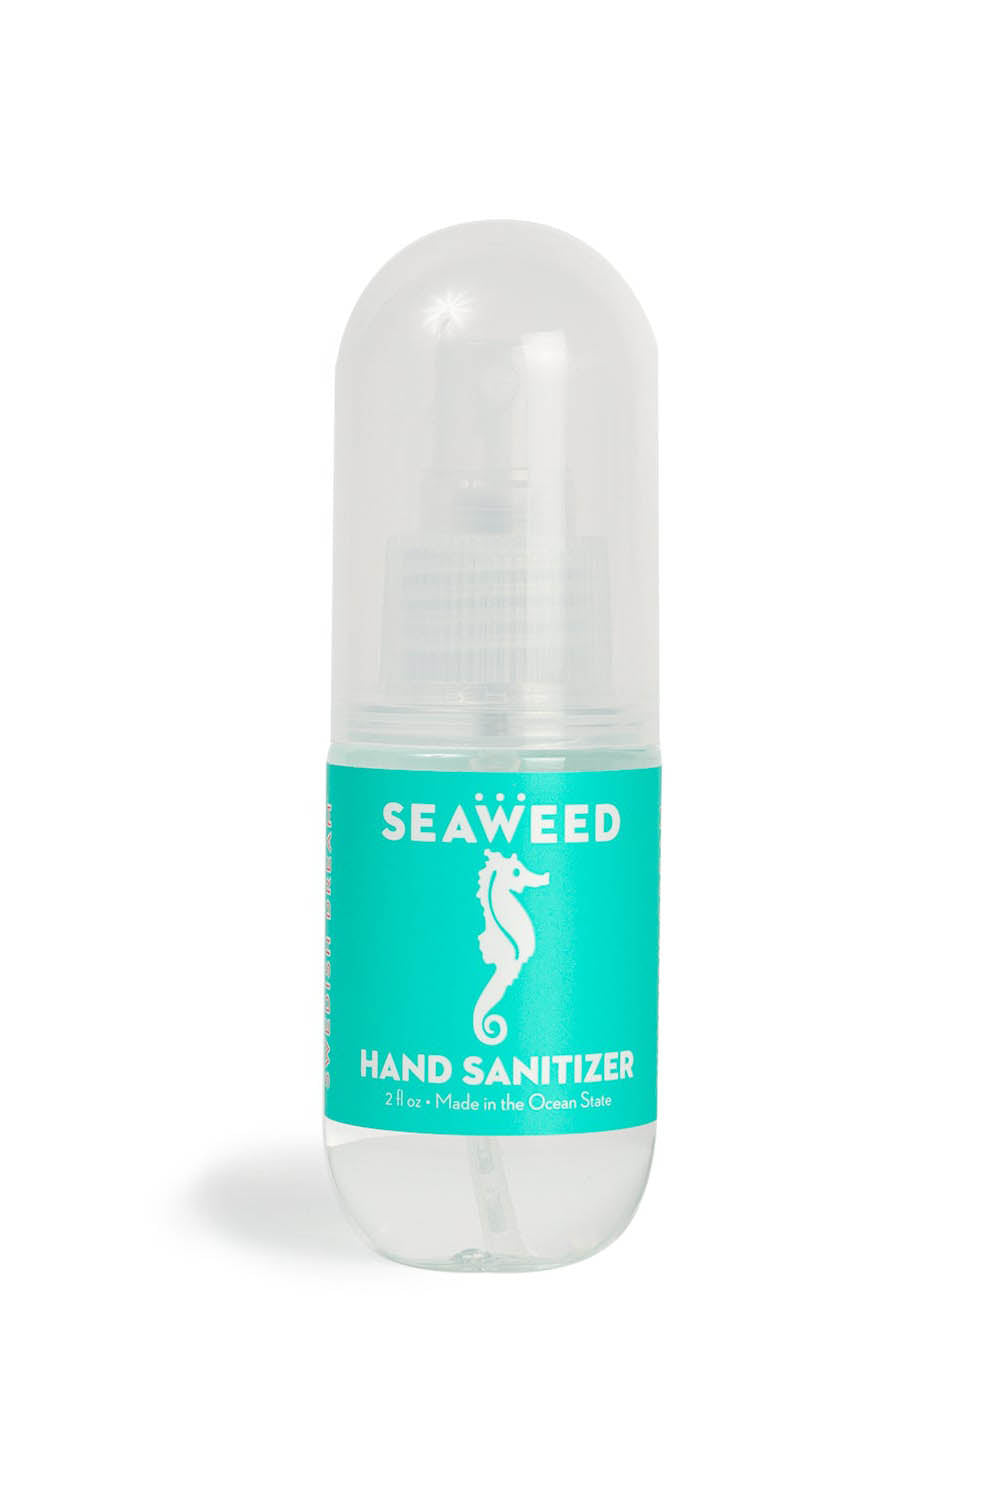 Swedish Dream Hand Sanitizer - Seaweed